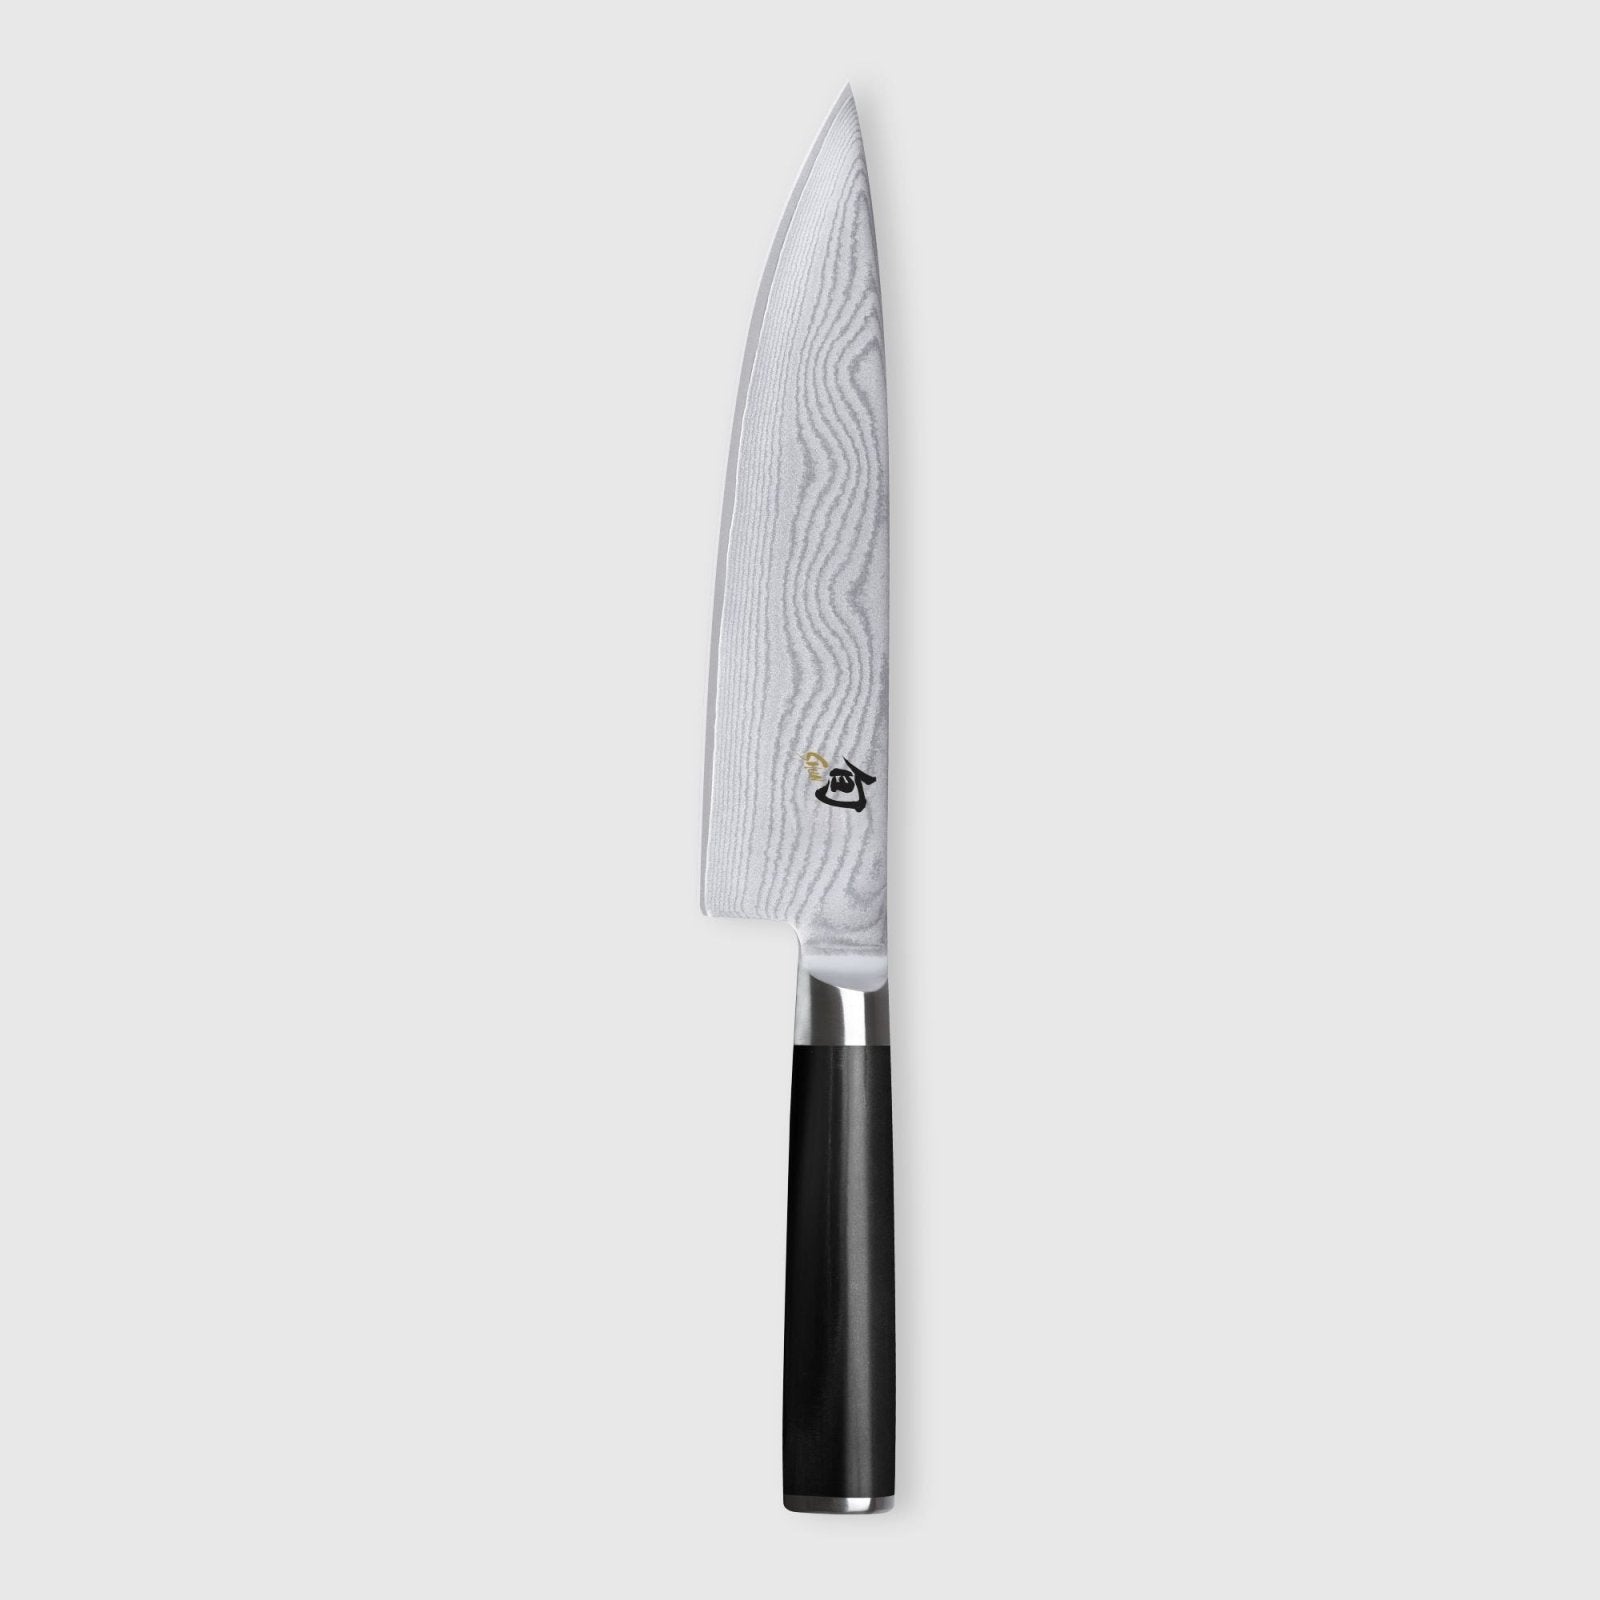 KAI Shun 20cm Chefs Knife Left handed - KAI-DM-0706L - The Cotswold Knife Company